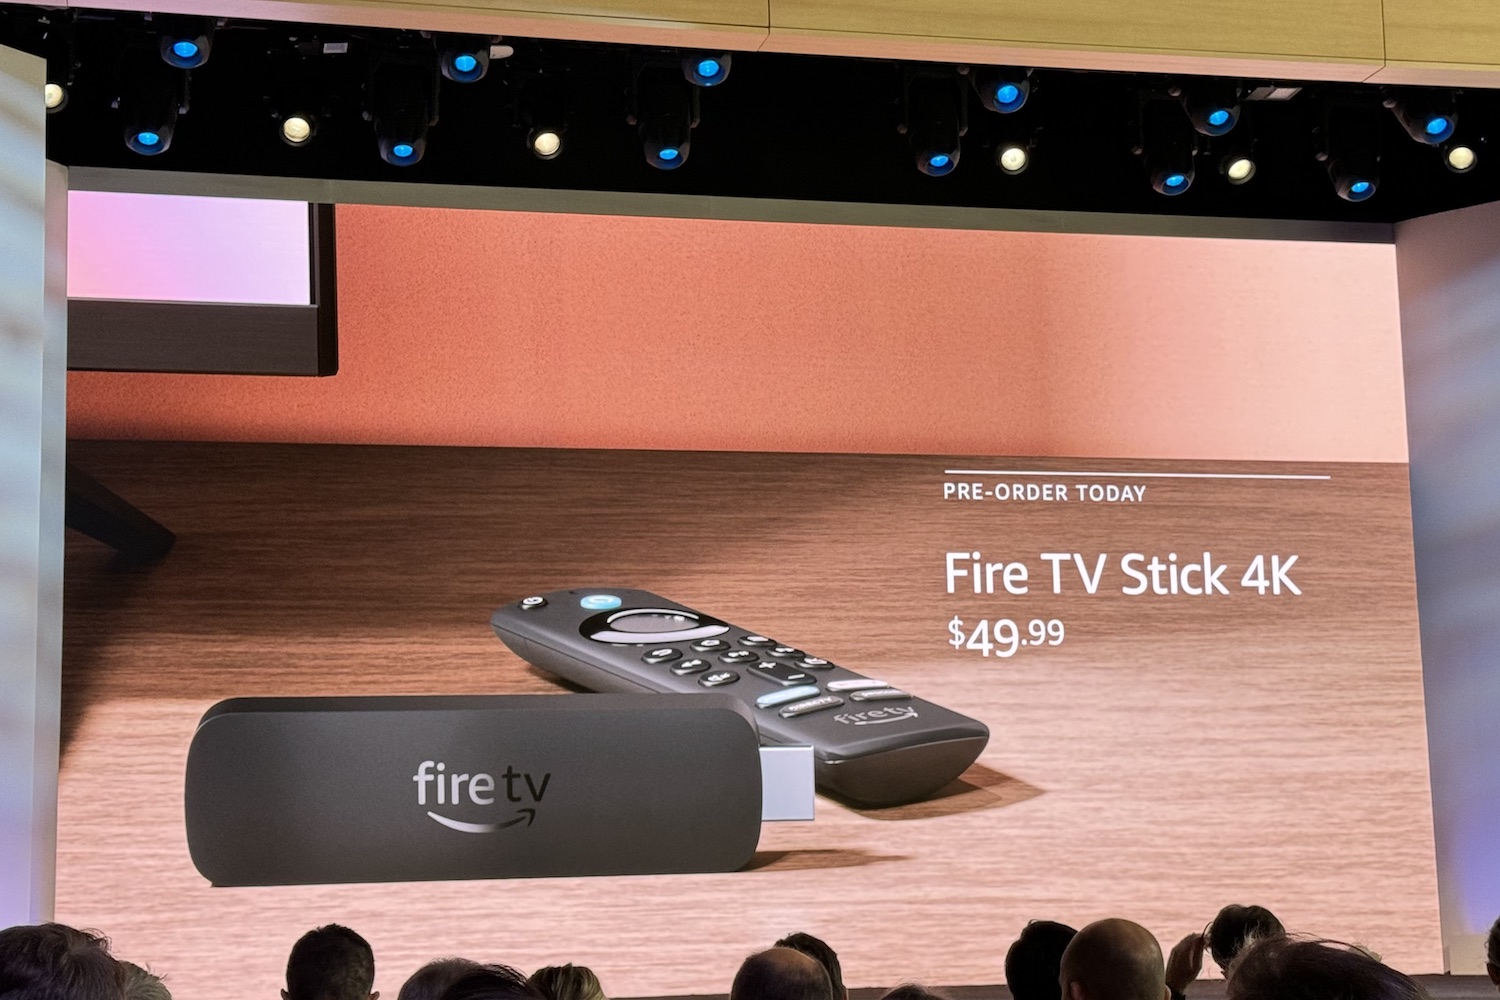 Seis razones para adquirir el Fire TV Stick 4K Max - Digital Trends Español